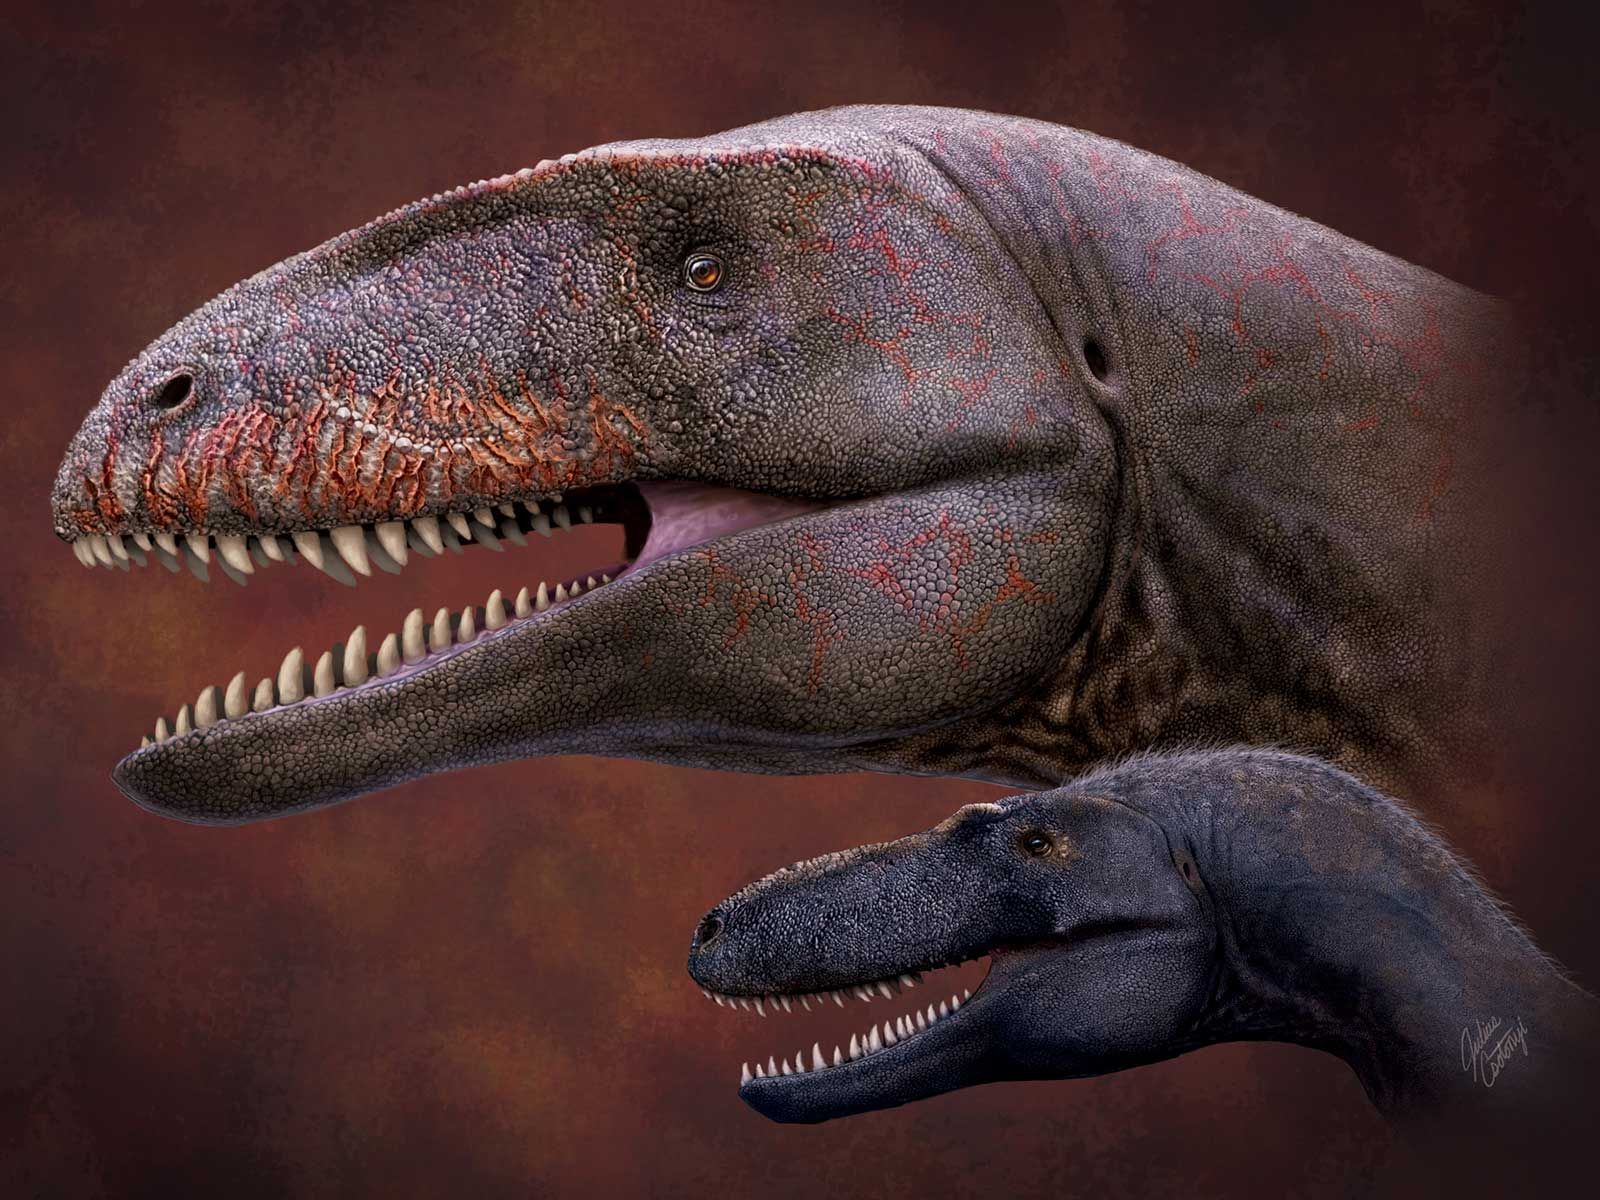 tyrannosaurus size comparison